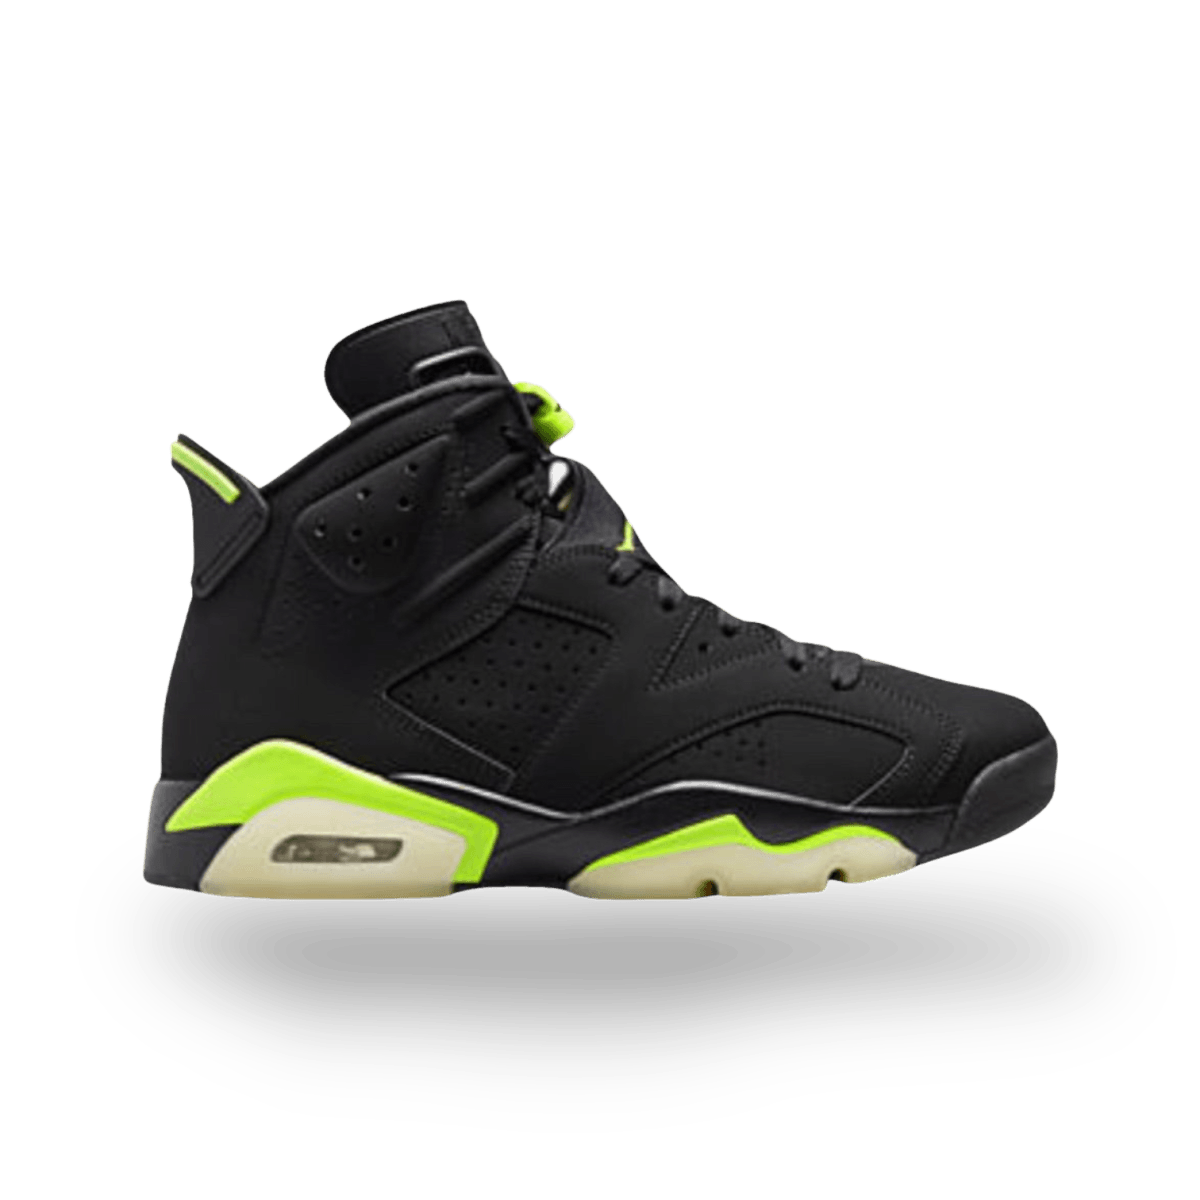 Air Jordan 6 Retro 'Electric Green' - High Sneaker - Jawns on Fire Sneakers & Streetwear